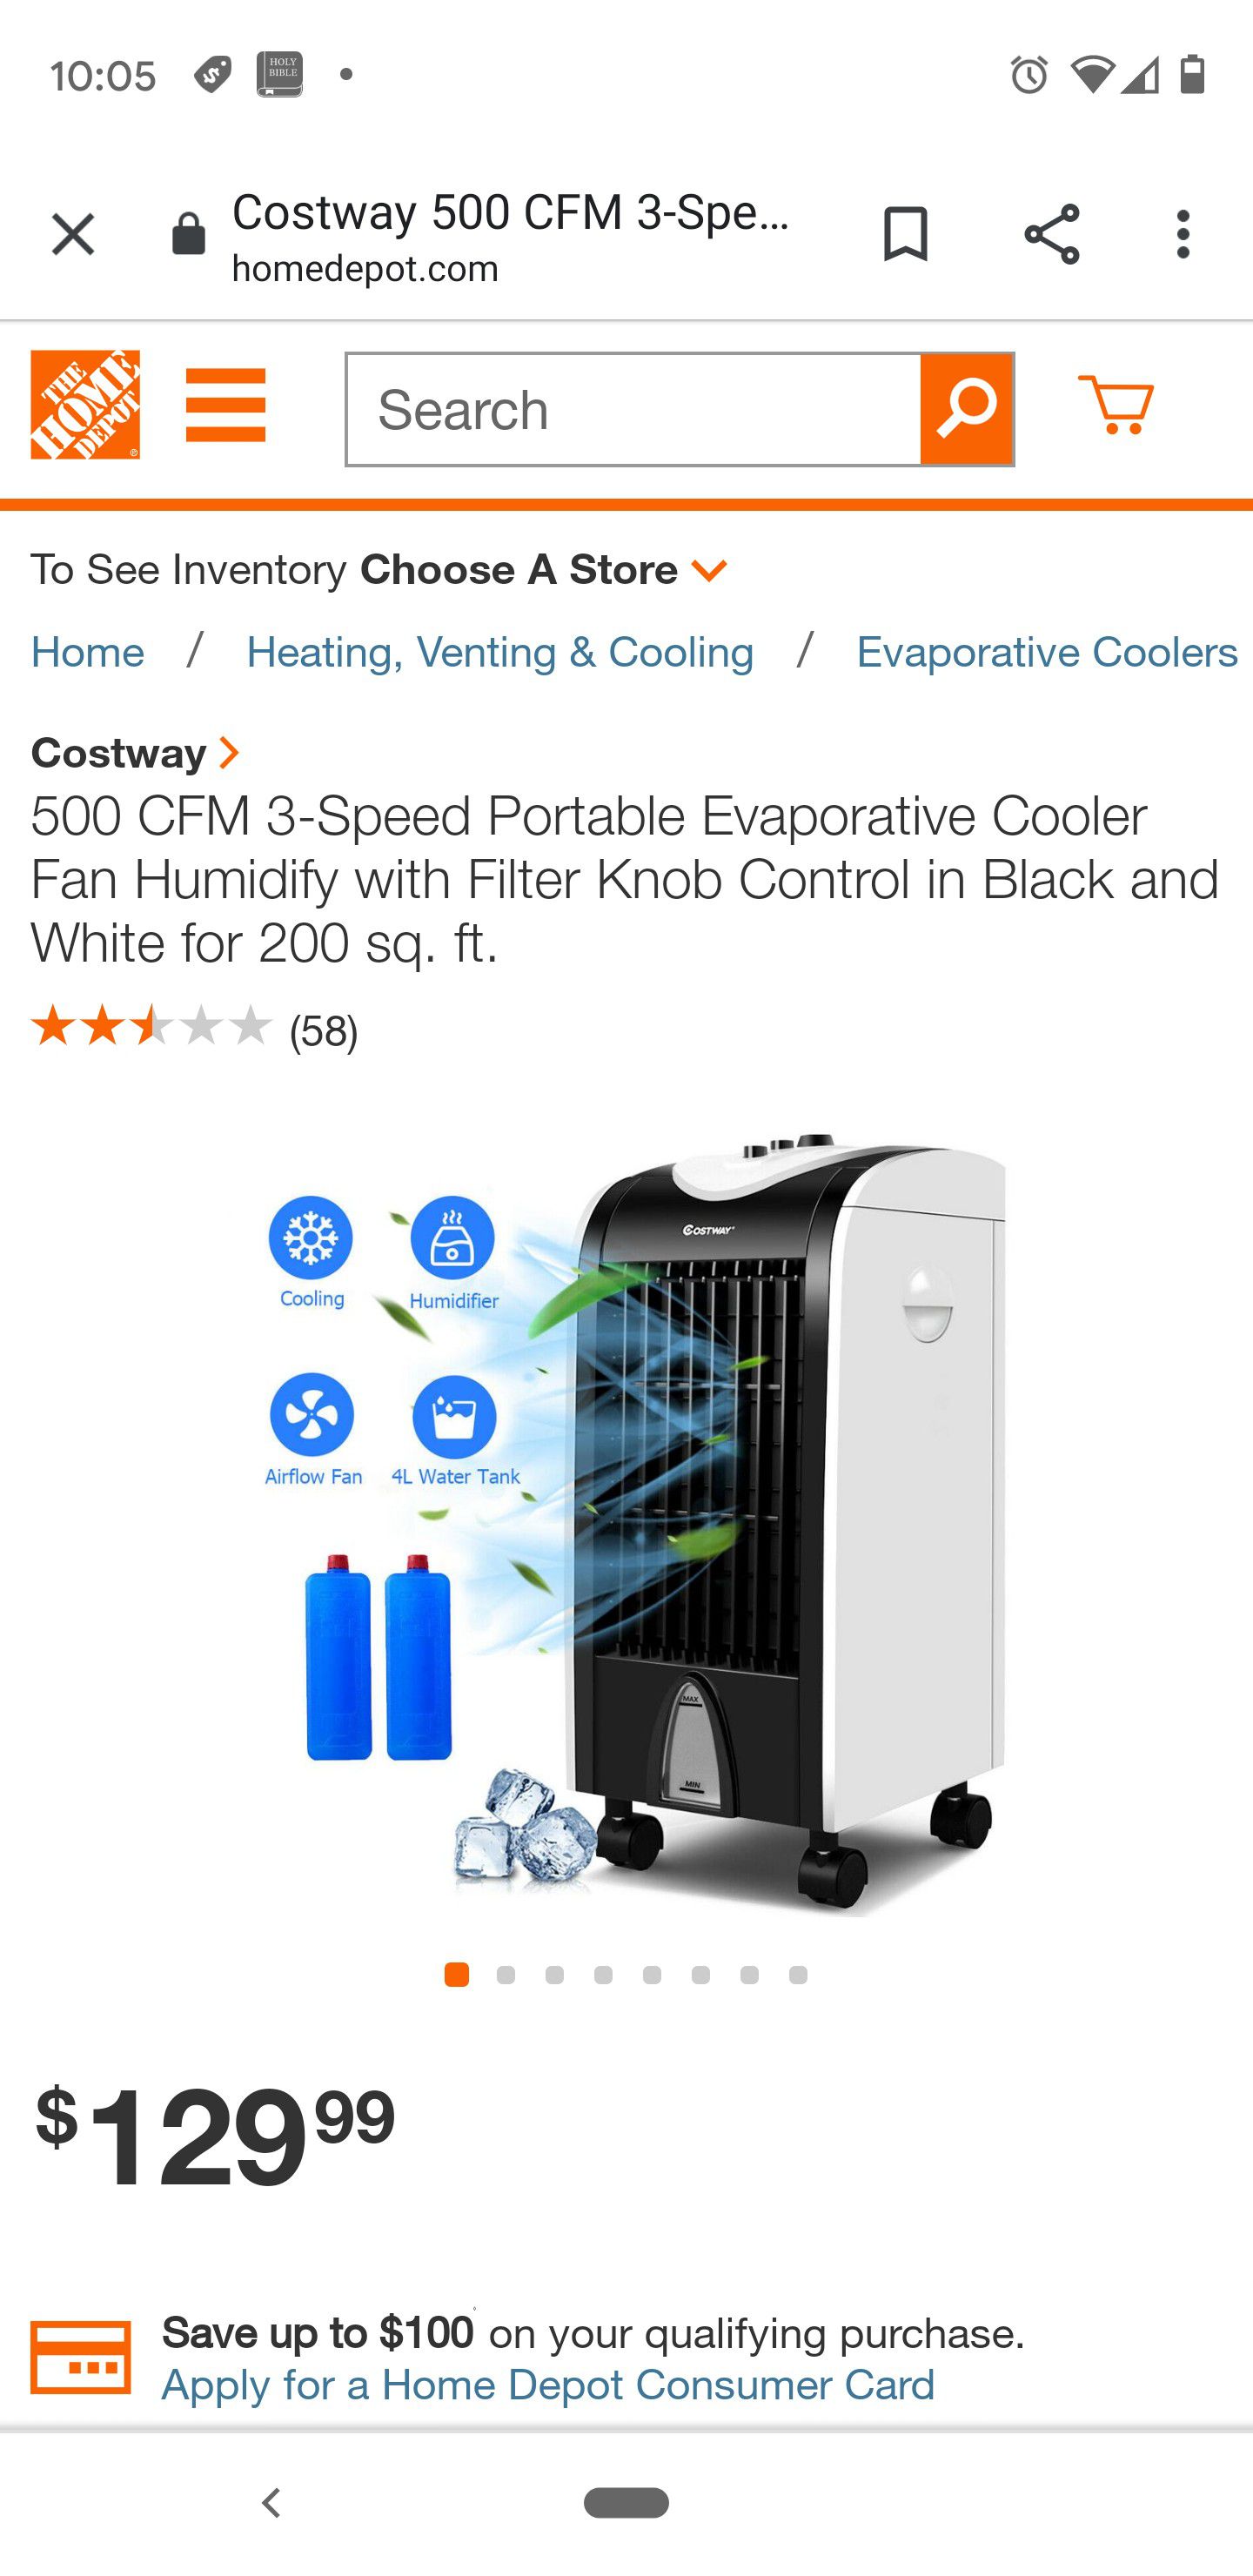 Cooler fan humidifier BRAND NEW